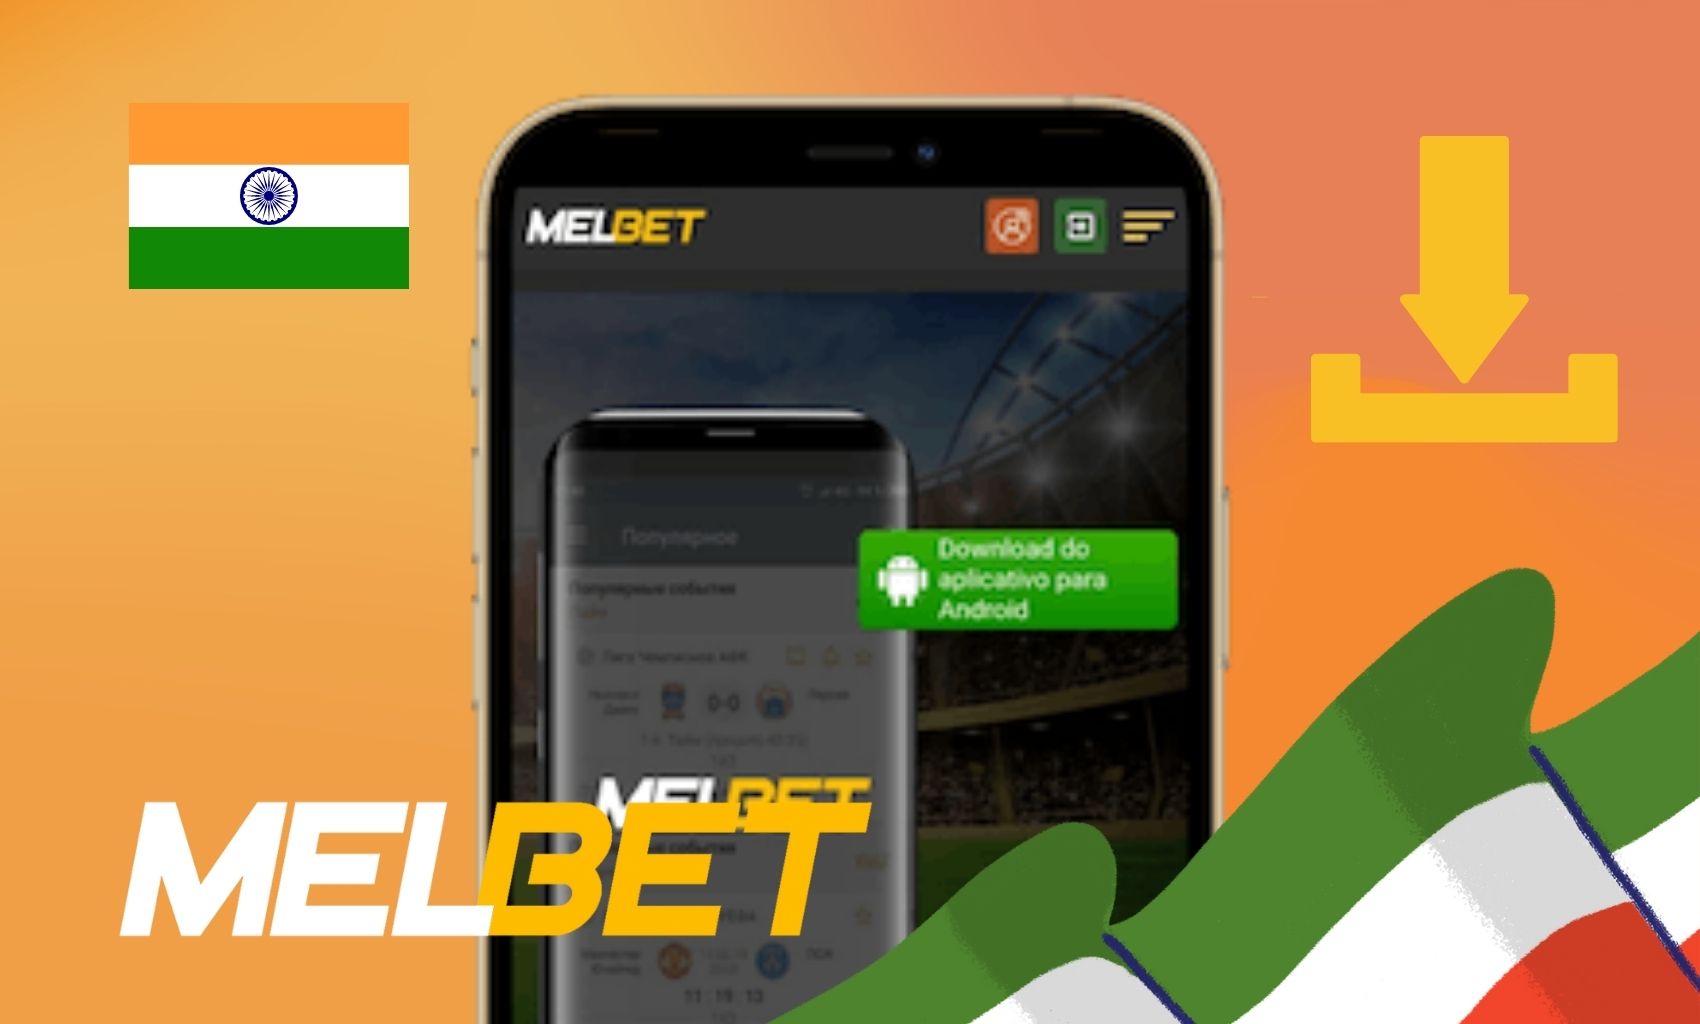 Melbet mobile app download instructions